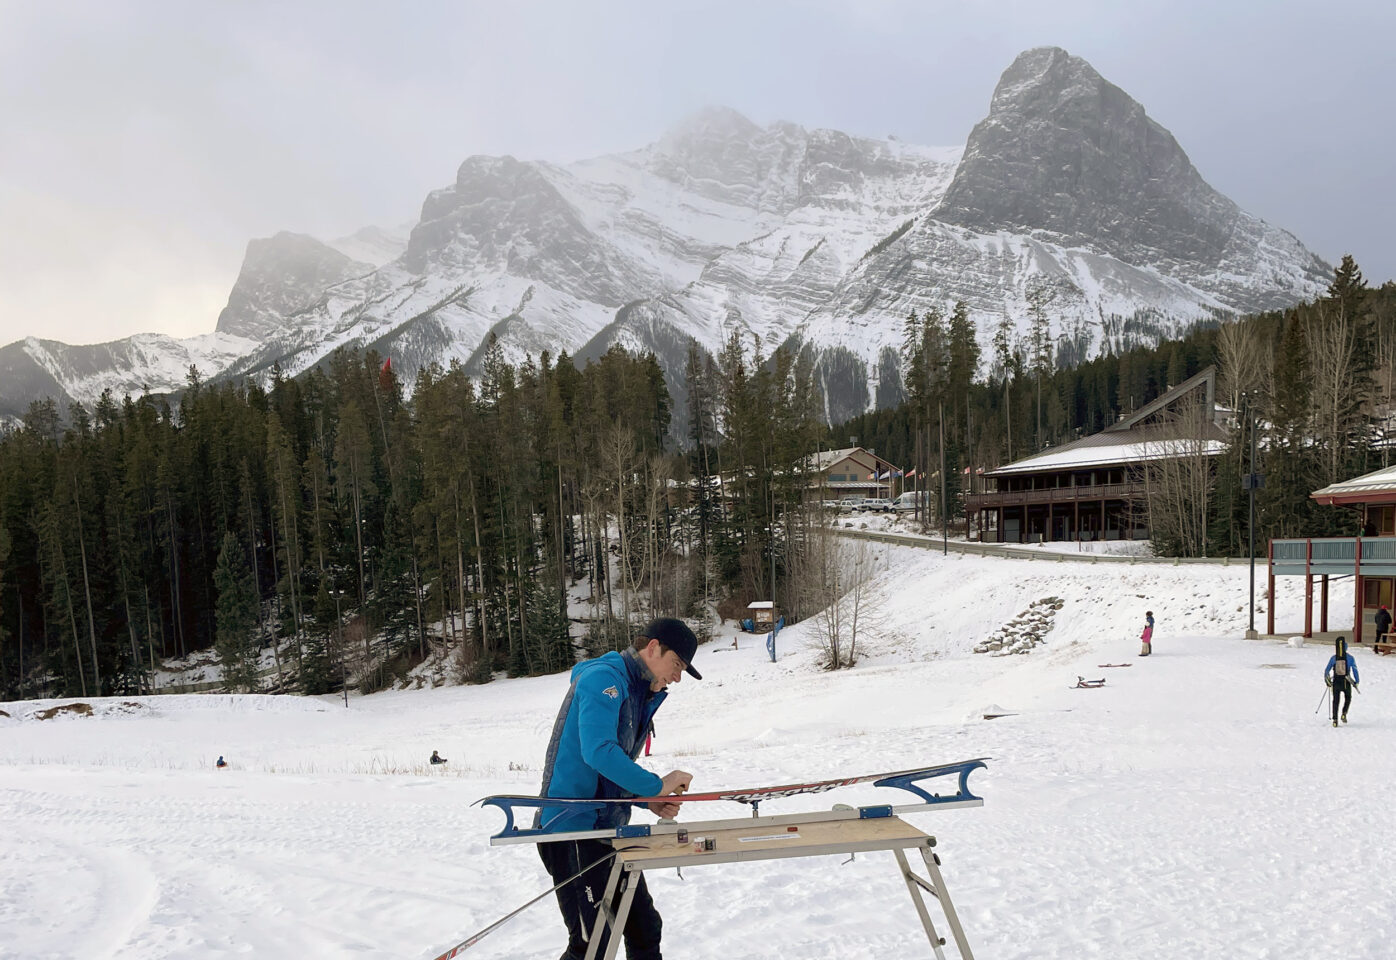 Adam St. Pierre preparing skis